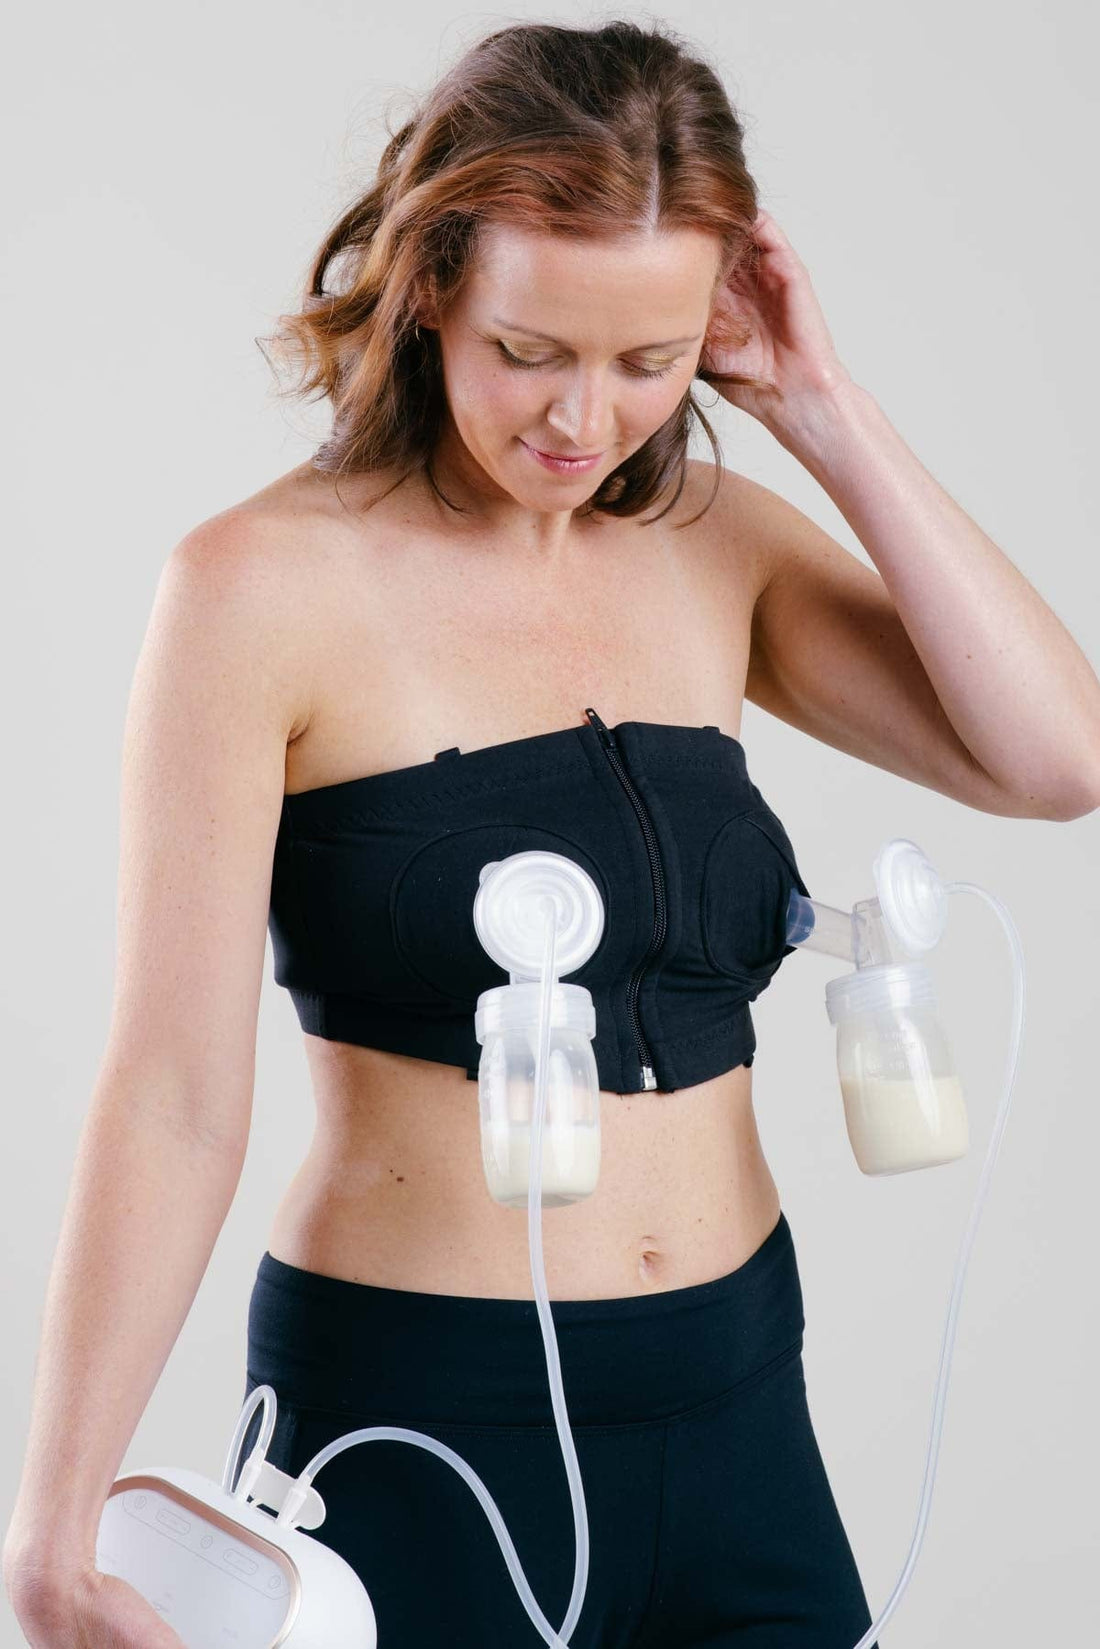 Shapee HandsFree Pumping Bra (Black) - Pumping & breastfeeding, nursing  clip, velcro & zip design